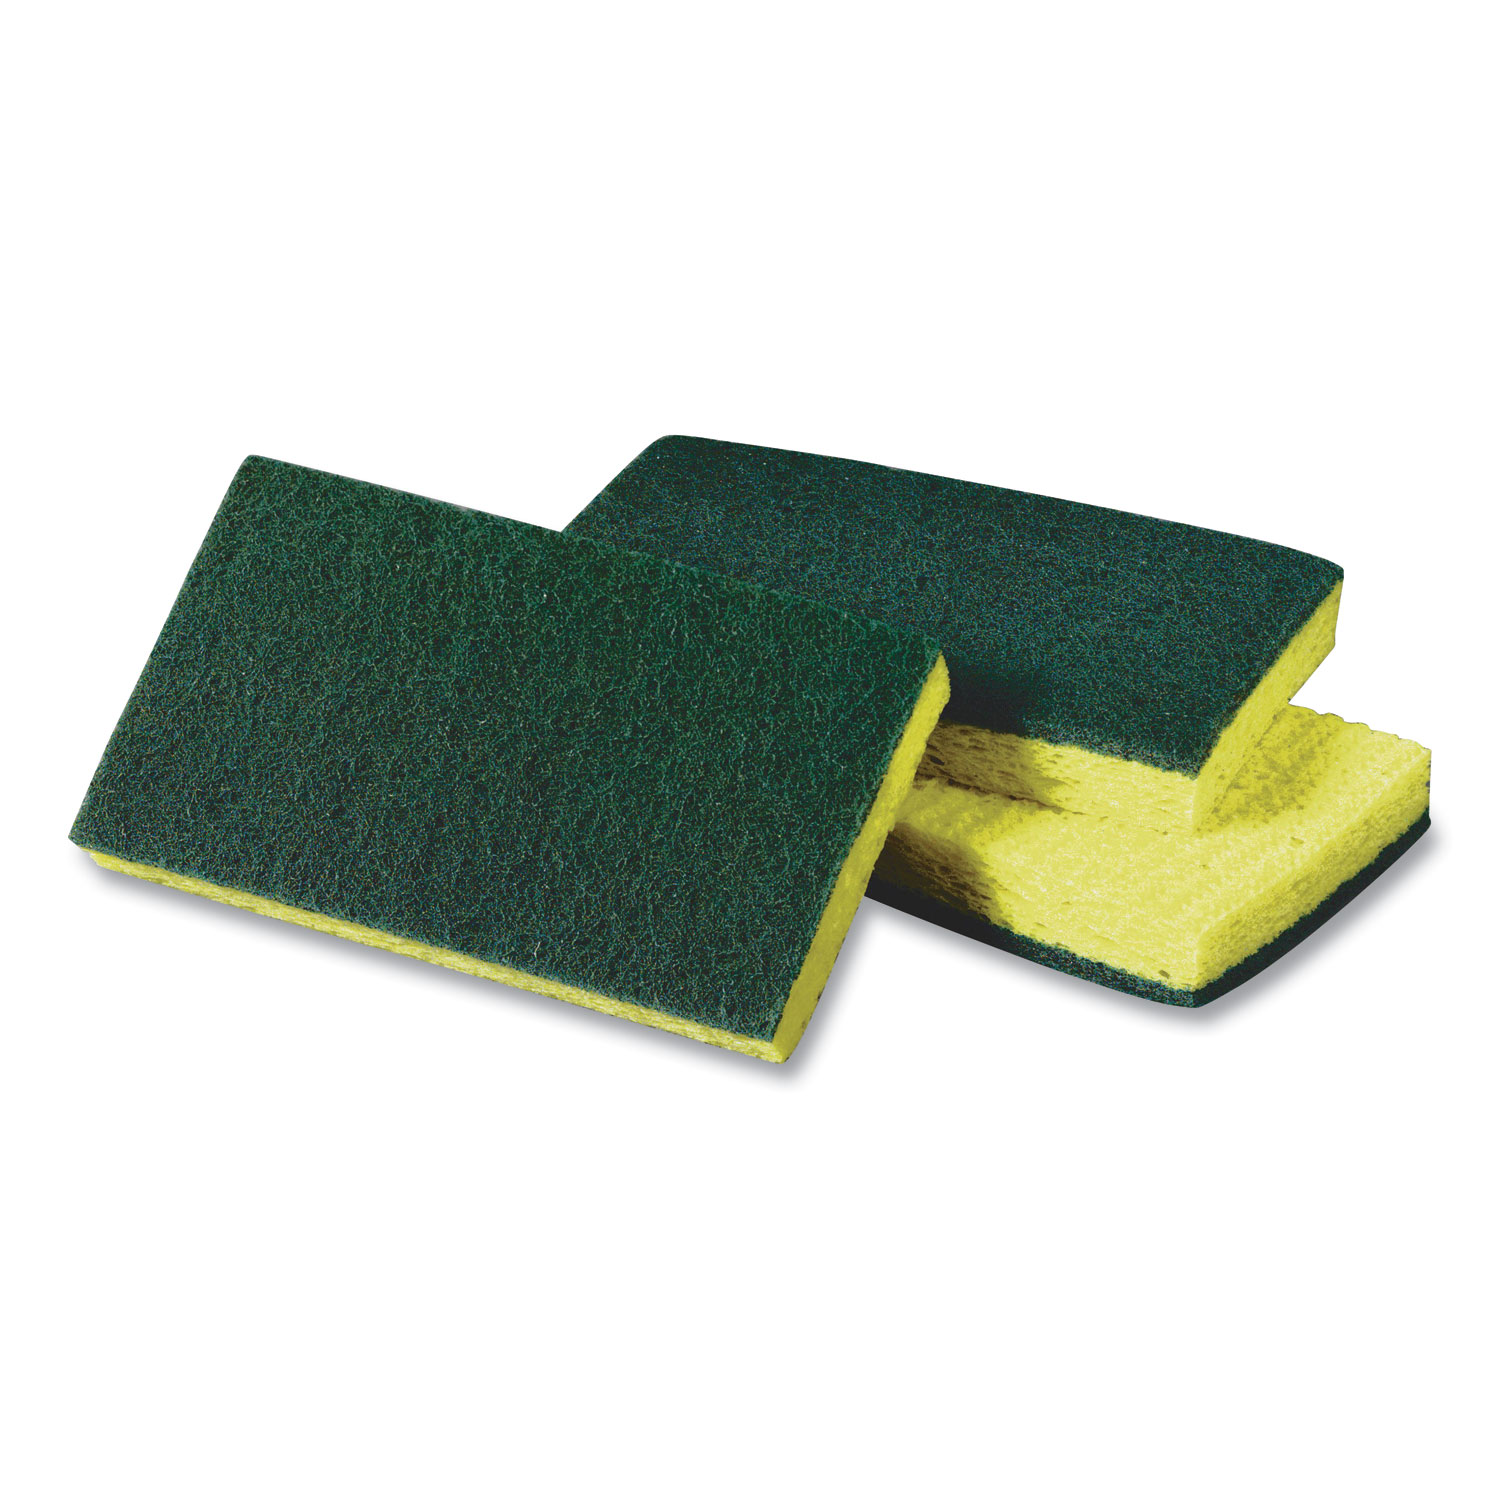  Scotch-Brite PROFESSIONAL 74 Medium-Duty Scrubbing Sponge, 3.6 x 6.1, Yellow/Green (MMM491305) 